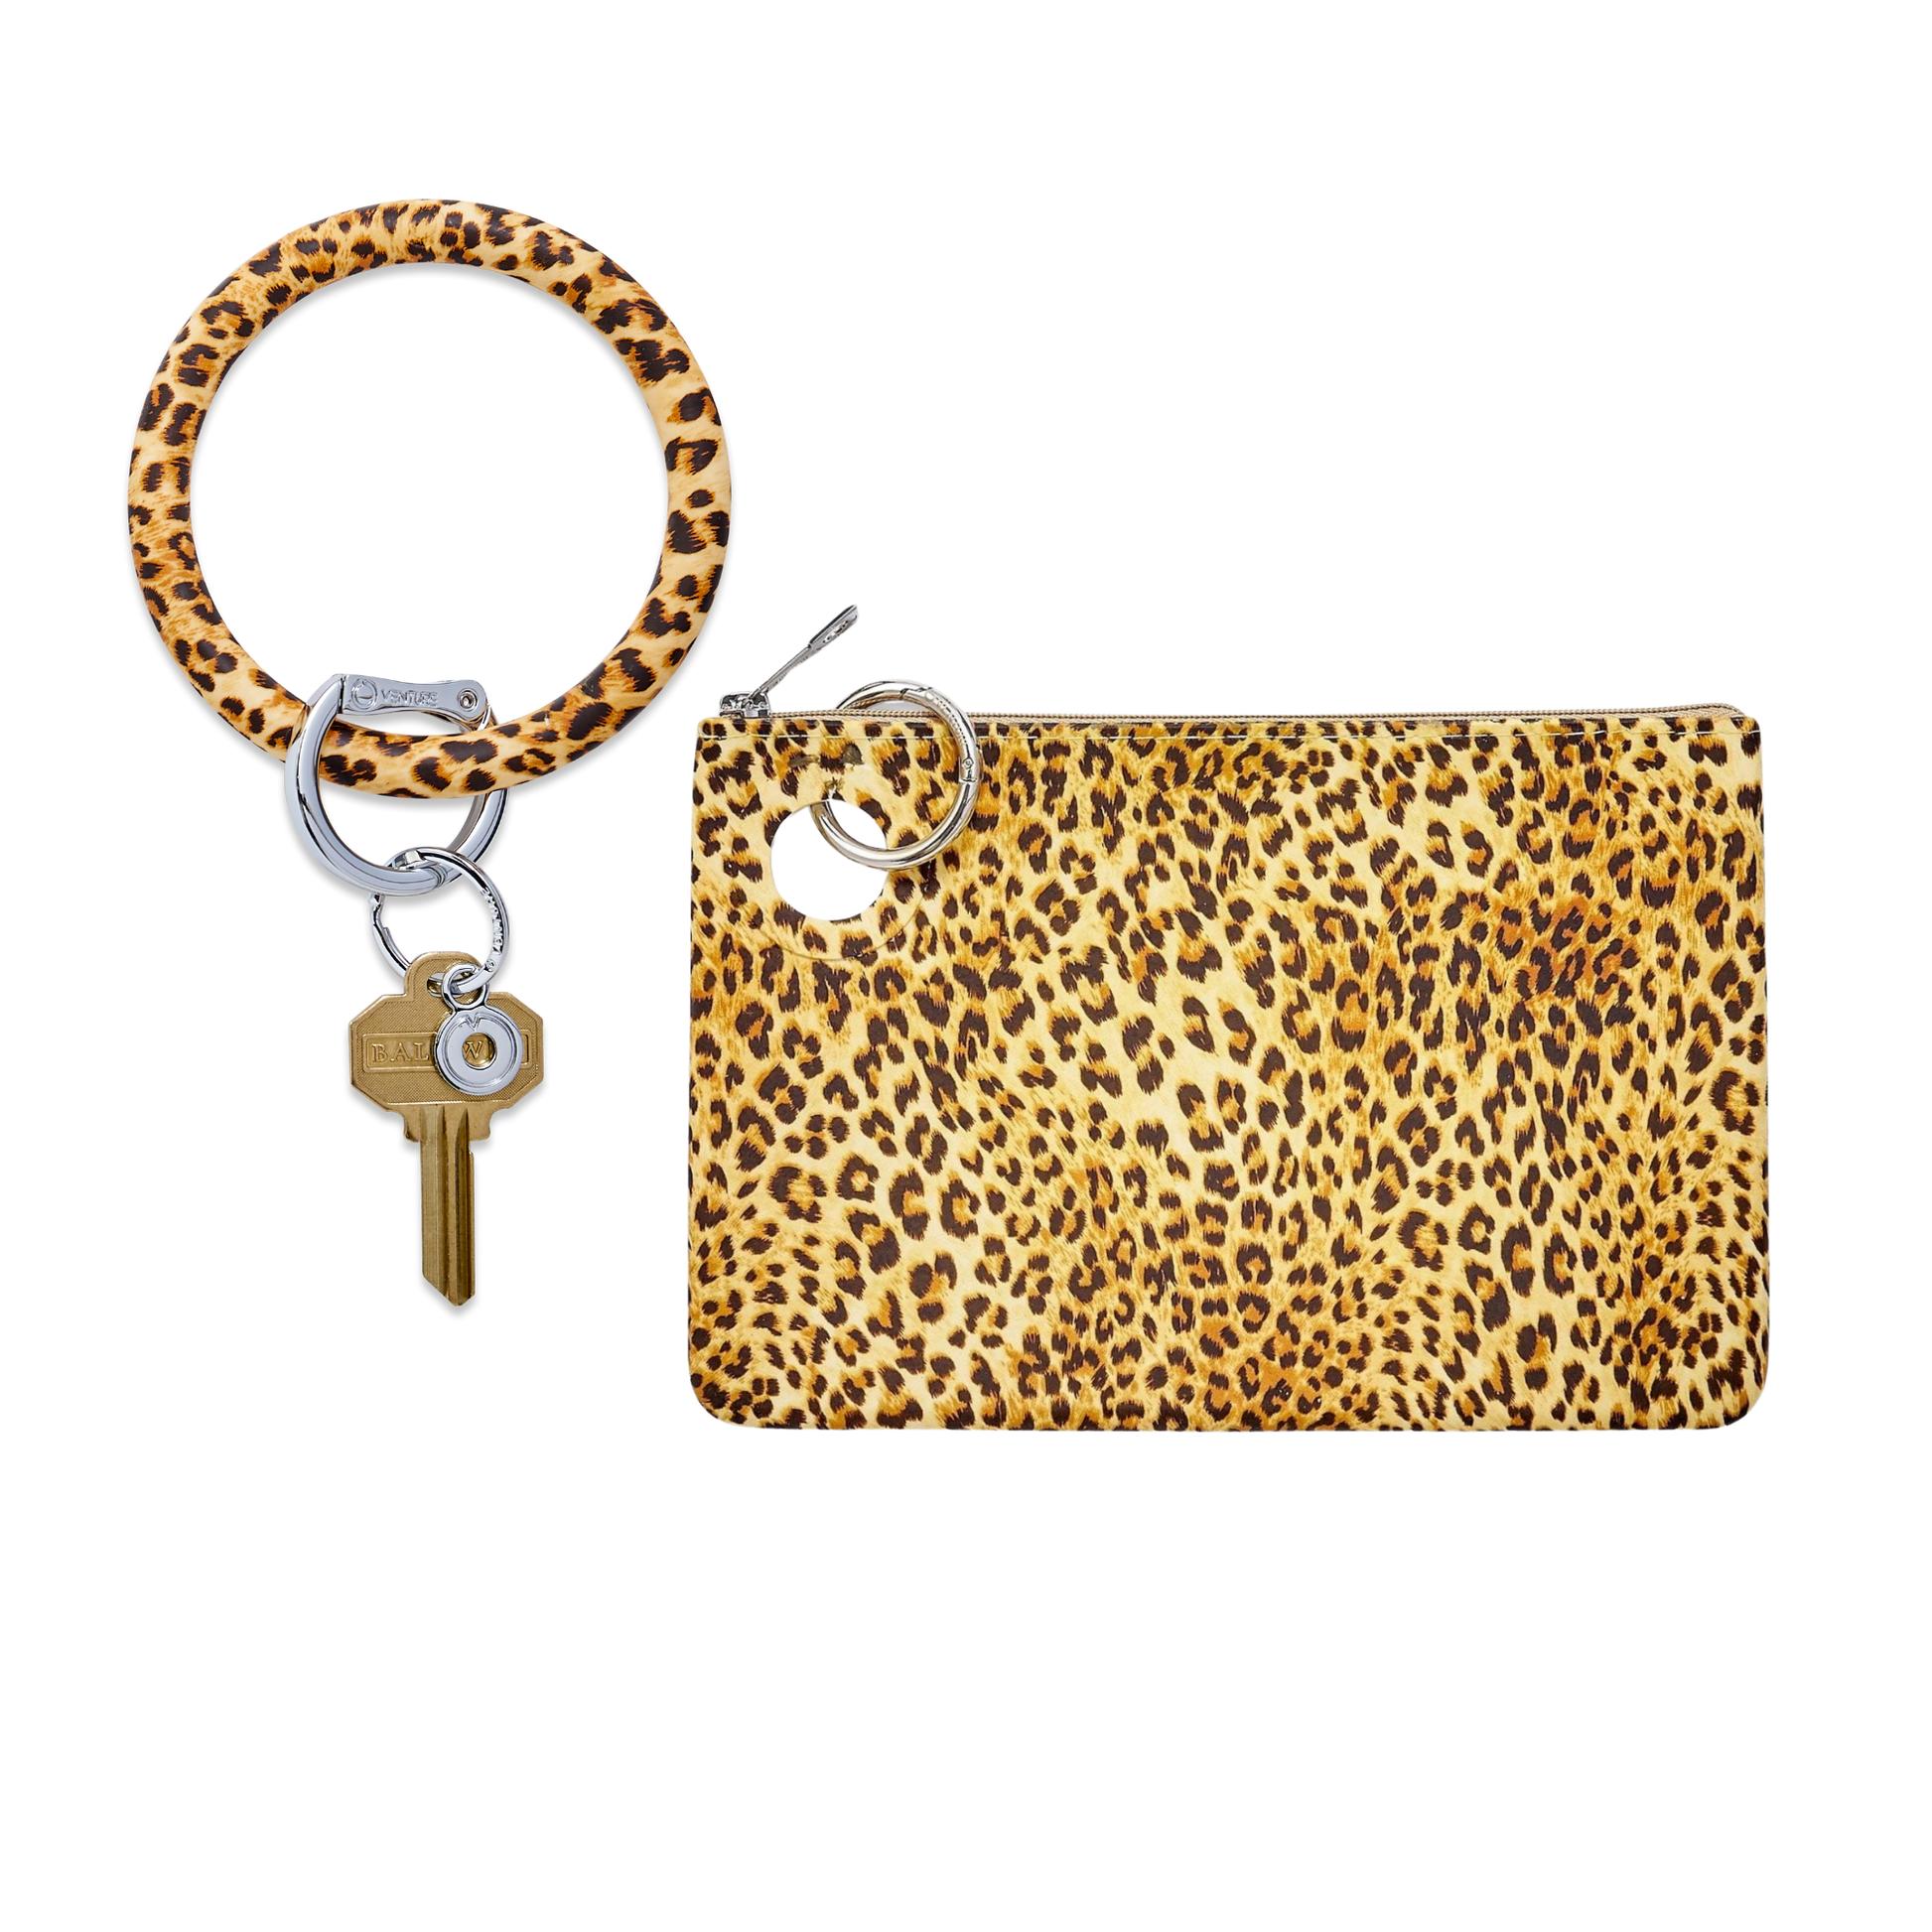 A sleek large pouch wristlet for organization in cheetah print.